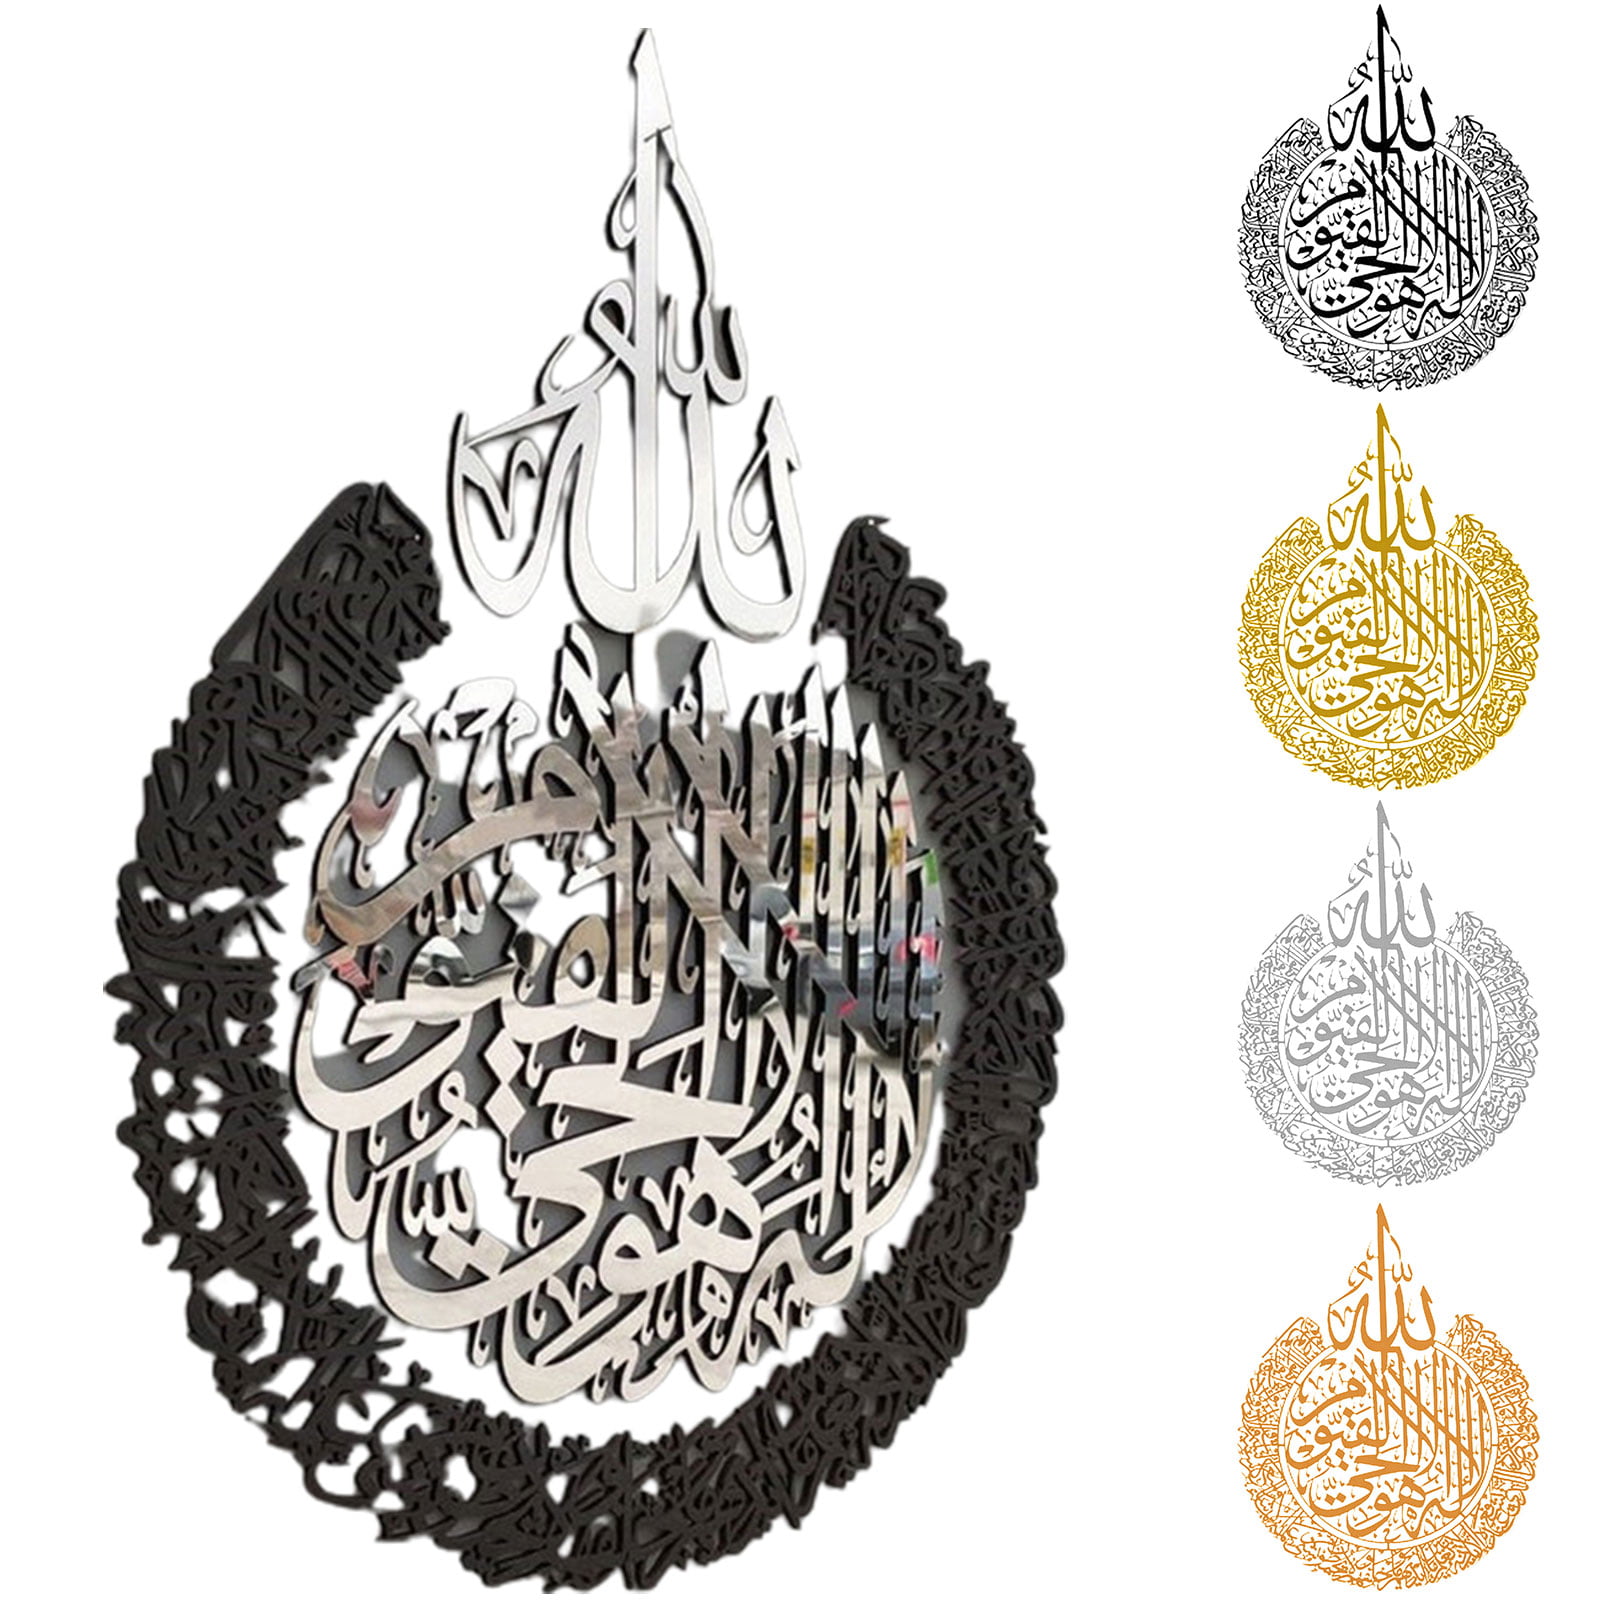 Islamic wall Art Decals Calligraphy Surah Al-Ikhlas Islamic Wall Stickers Murals